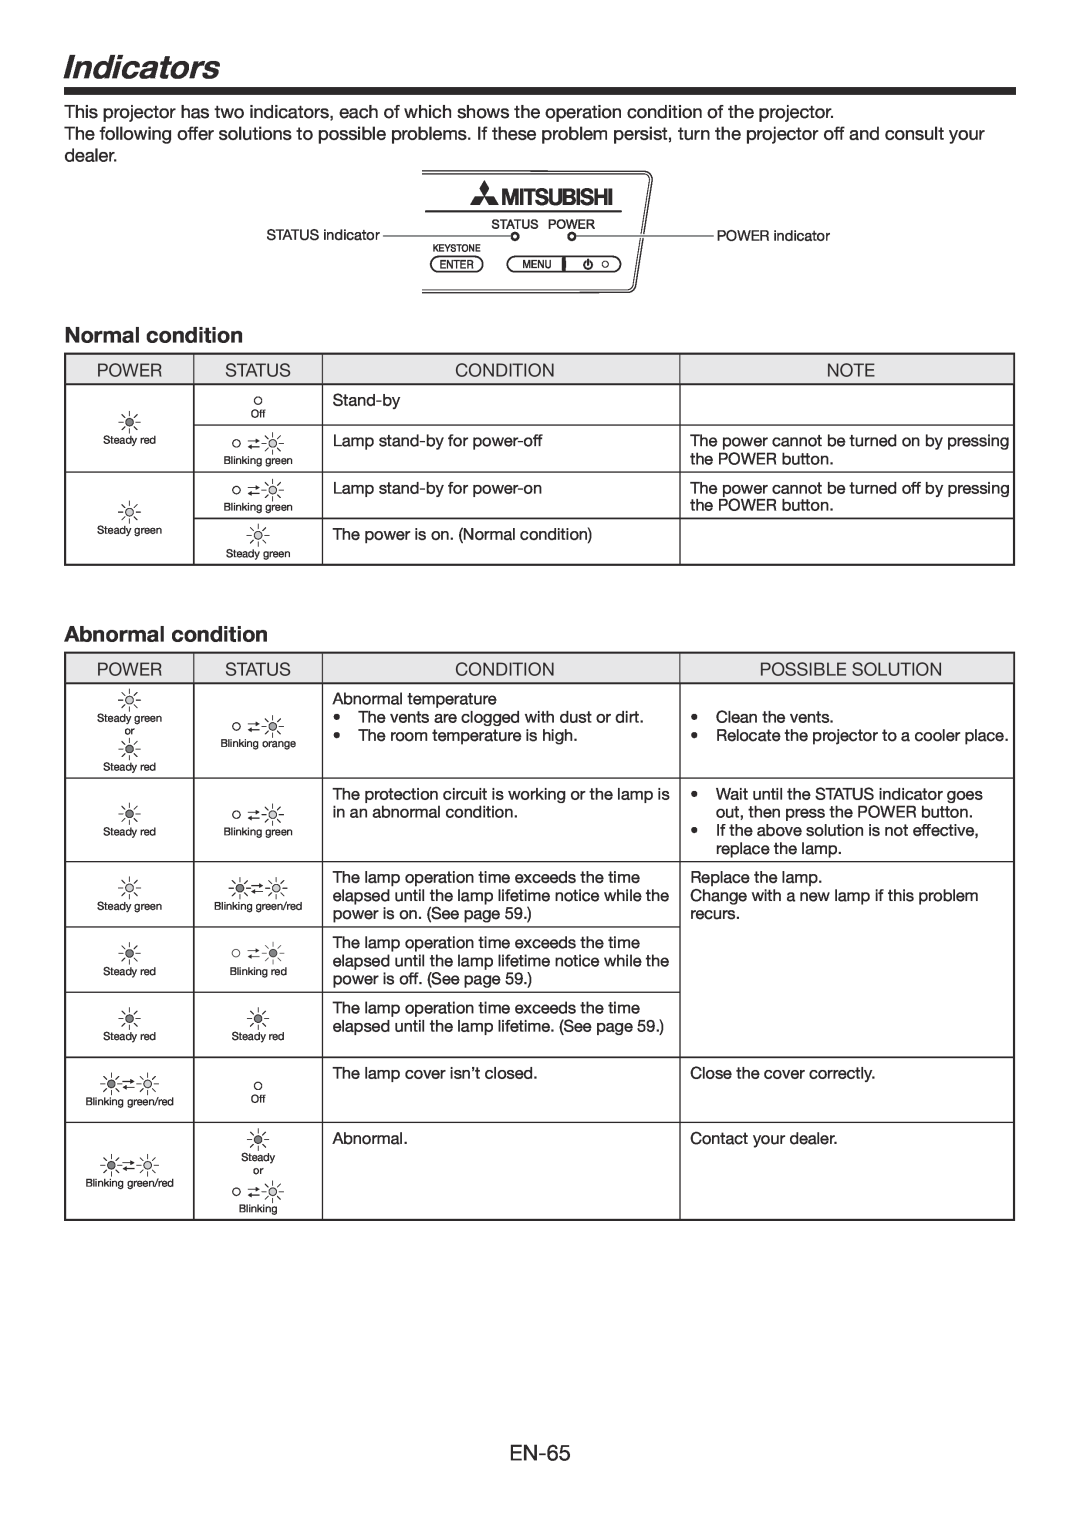 Mitsubishi Electronics WD390U-EST user manual Indicators, Normal condition, Abnormal condition 